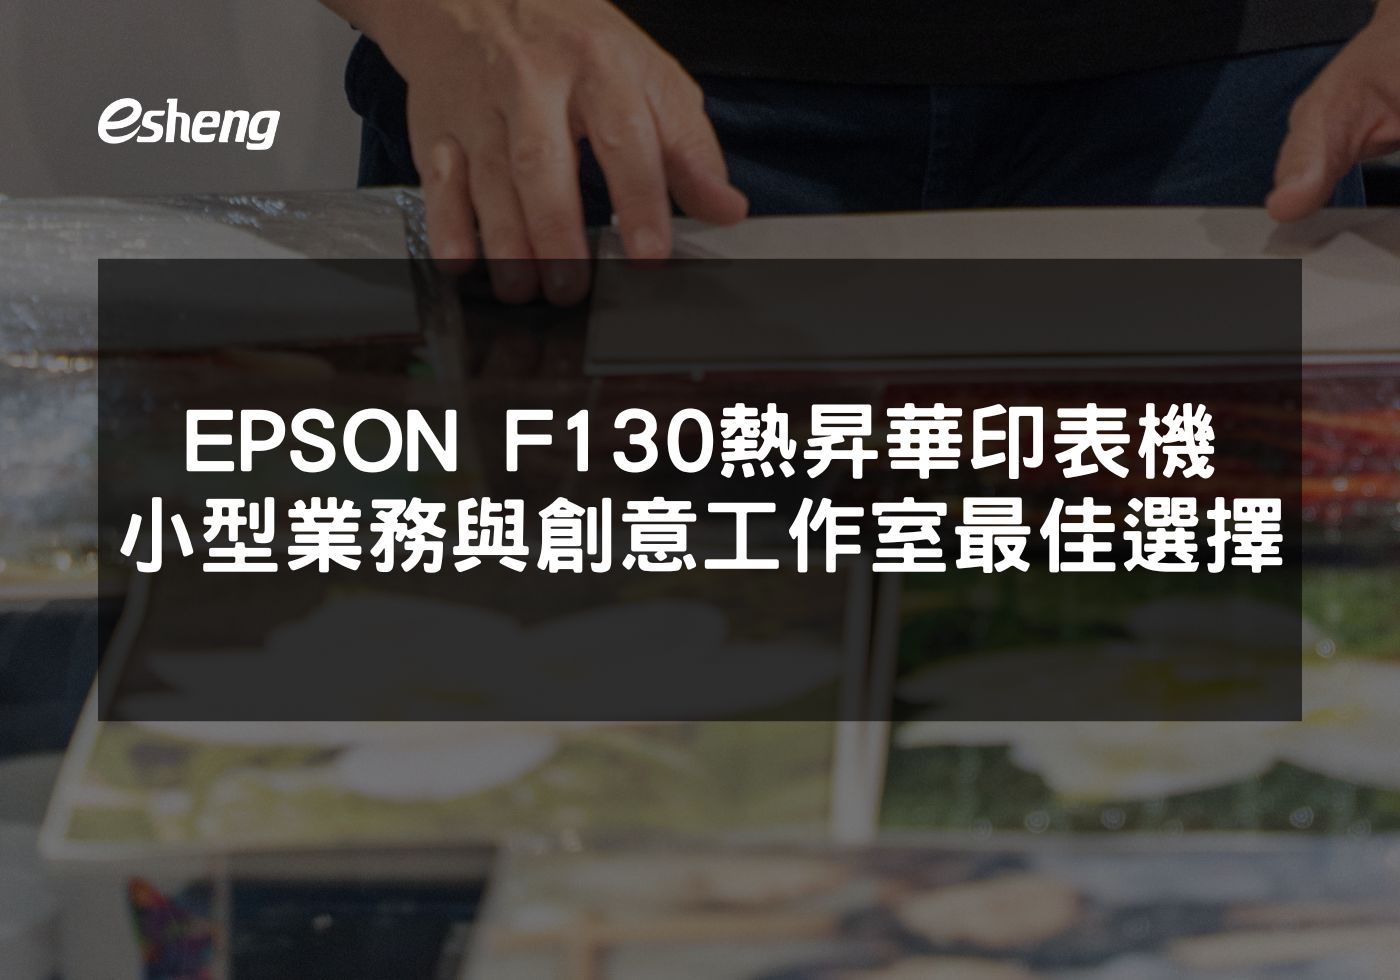 EPSON F130 熱昇華印表機小型業務與創意工作室最佳選擇